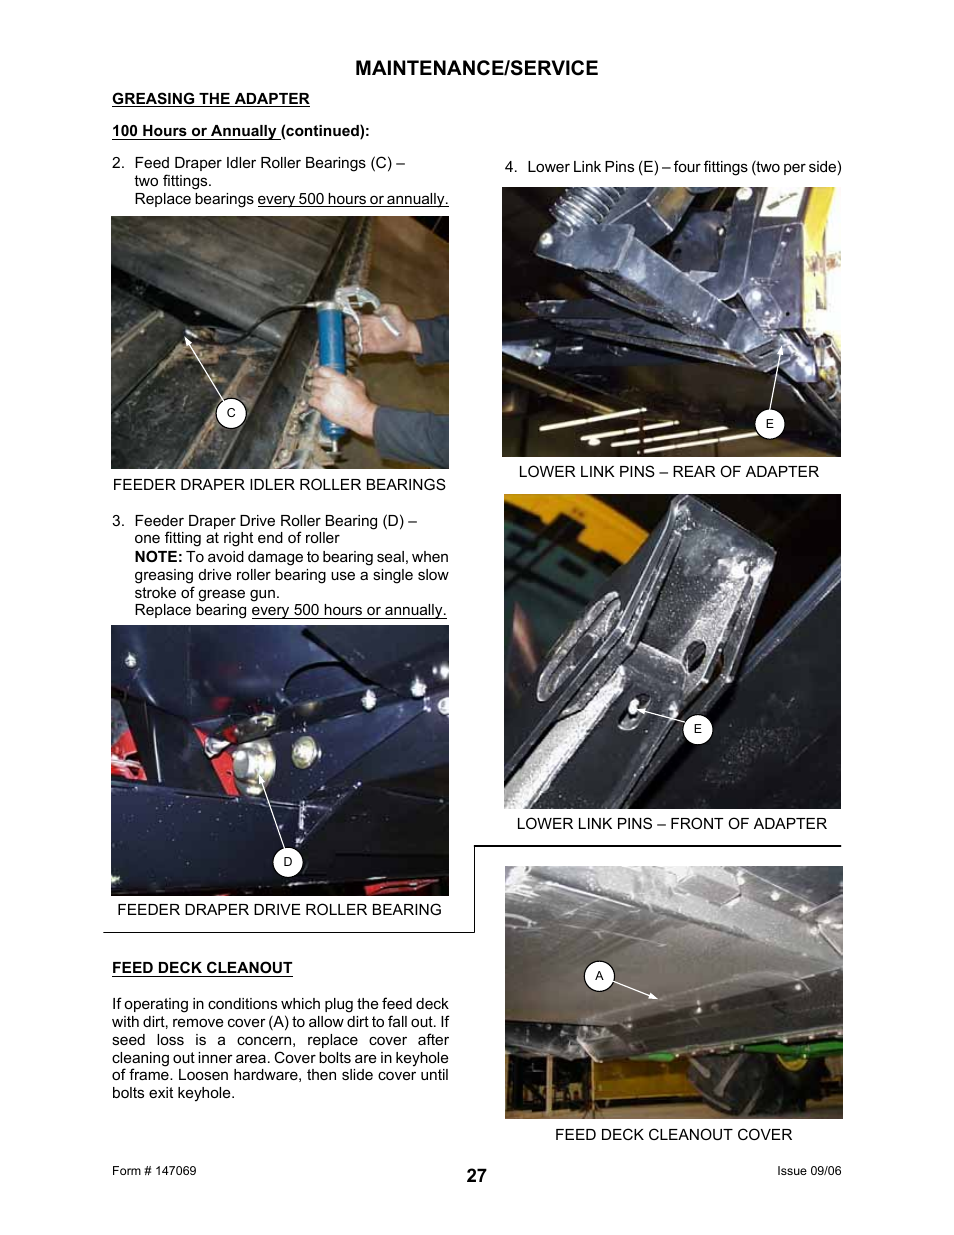 Maintenance/service | MacDon 873 Combine Adapter User Manual | Page 29 / 91